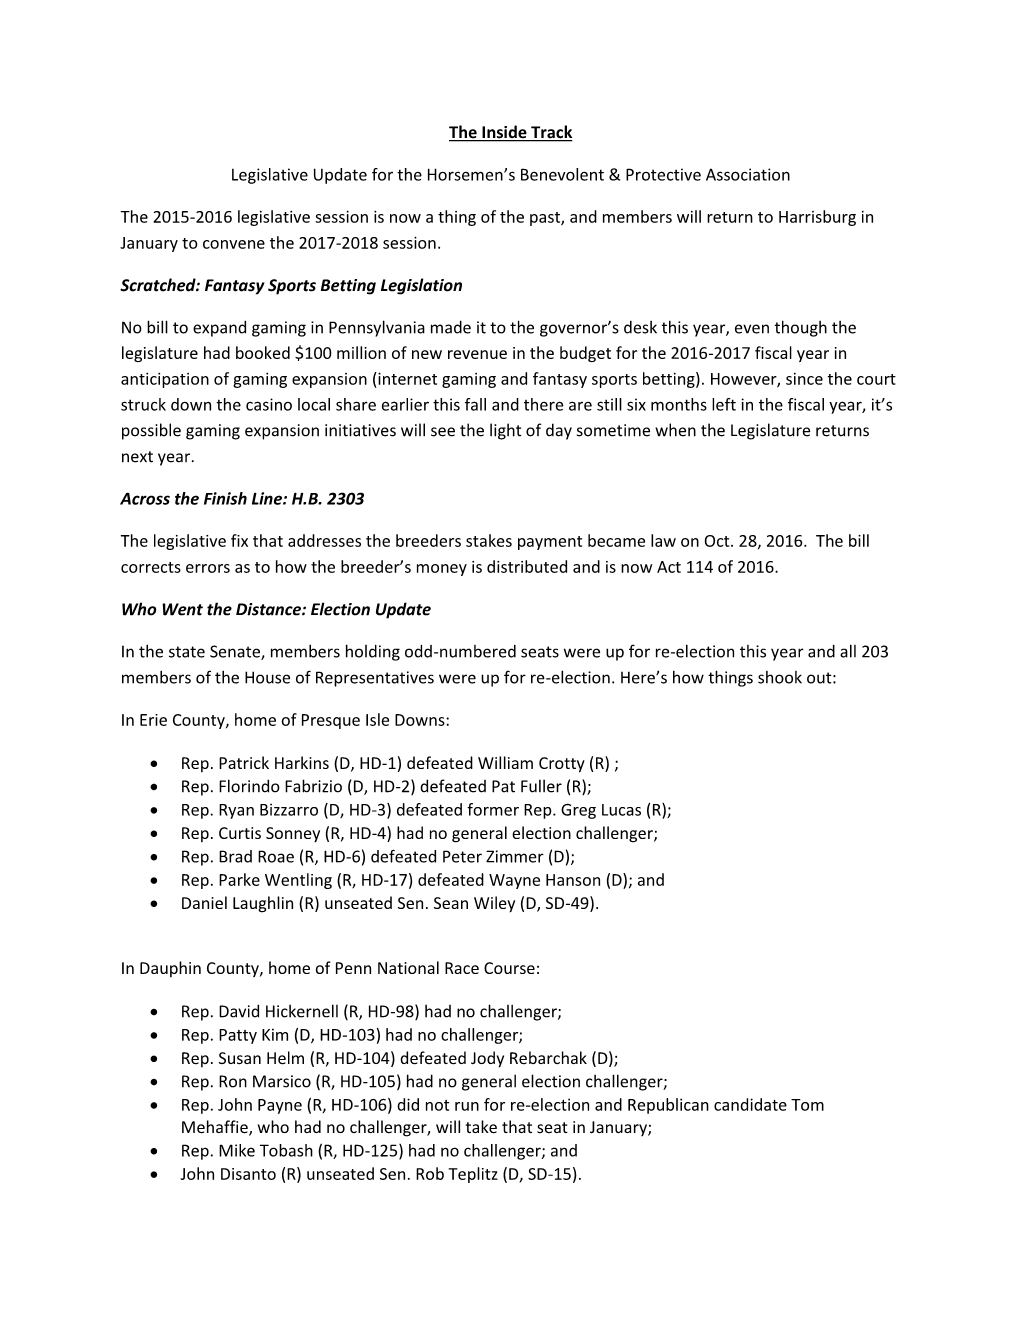 The Inside Track Legislative Update for the Horsemen's Benevolent & Protective Association the 2015-2016 Legislative Sessi